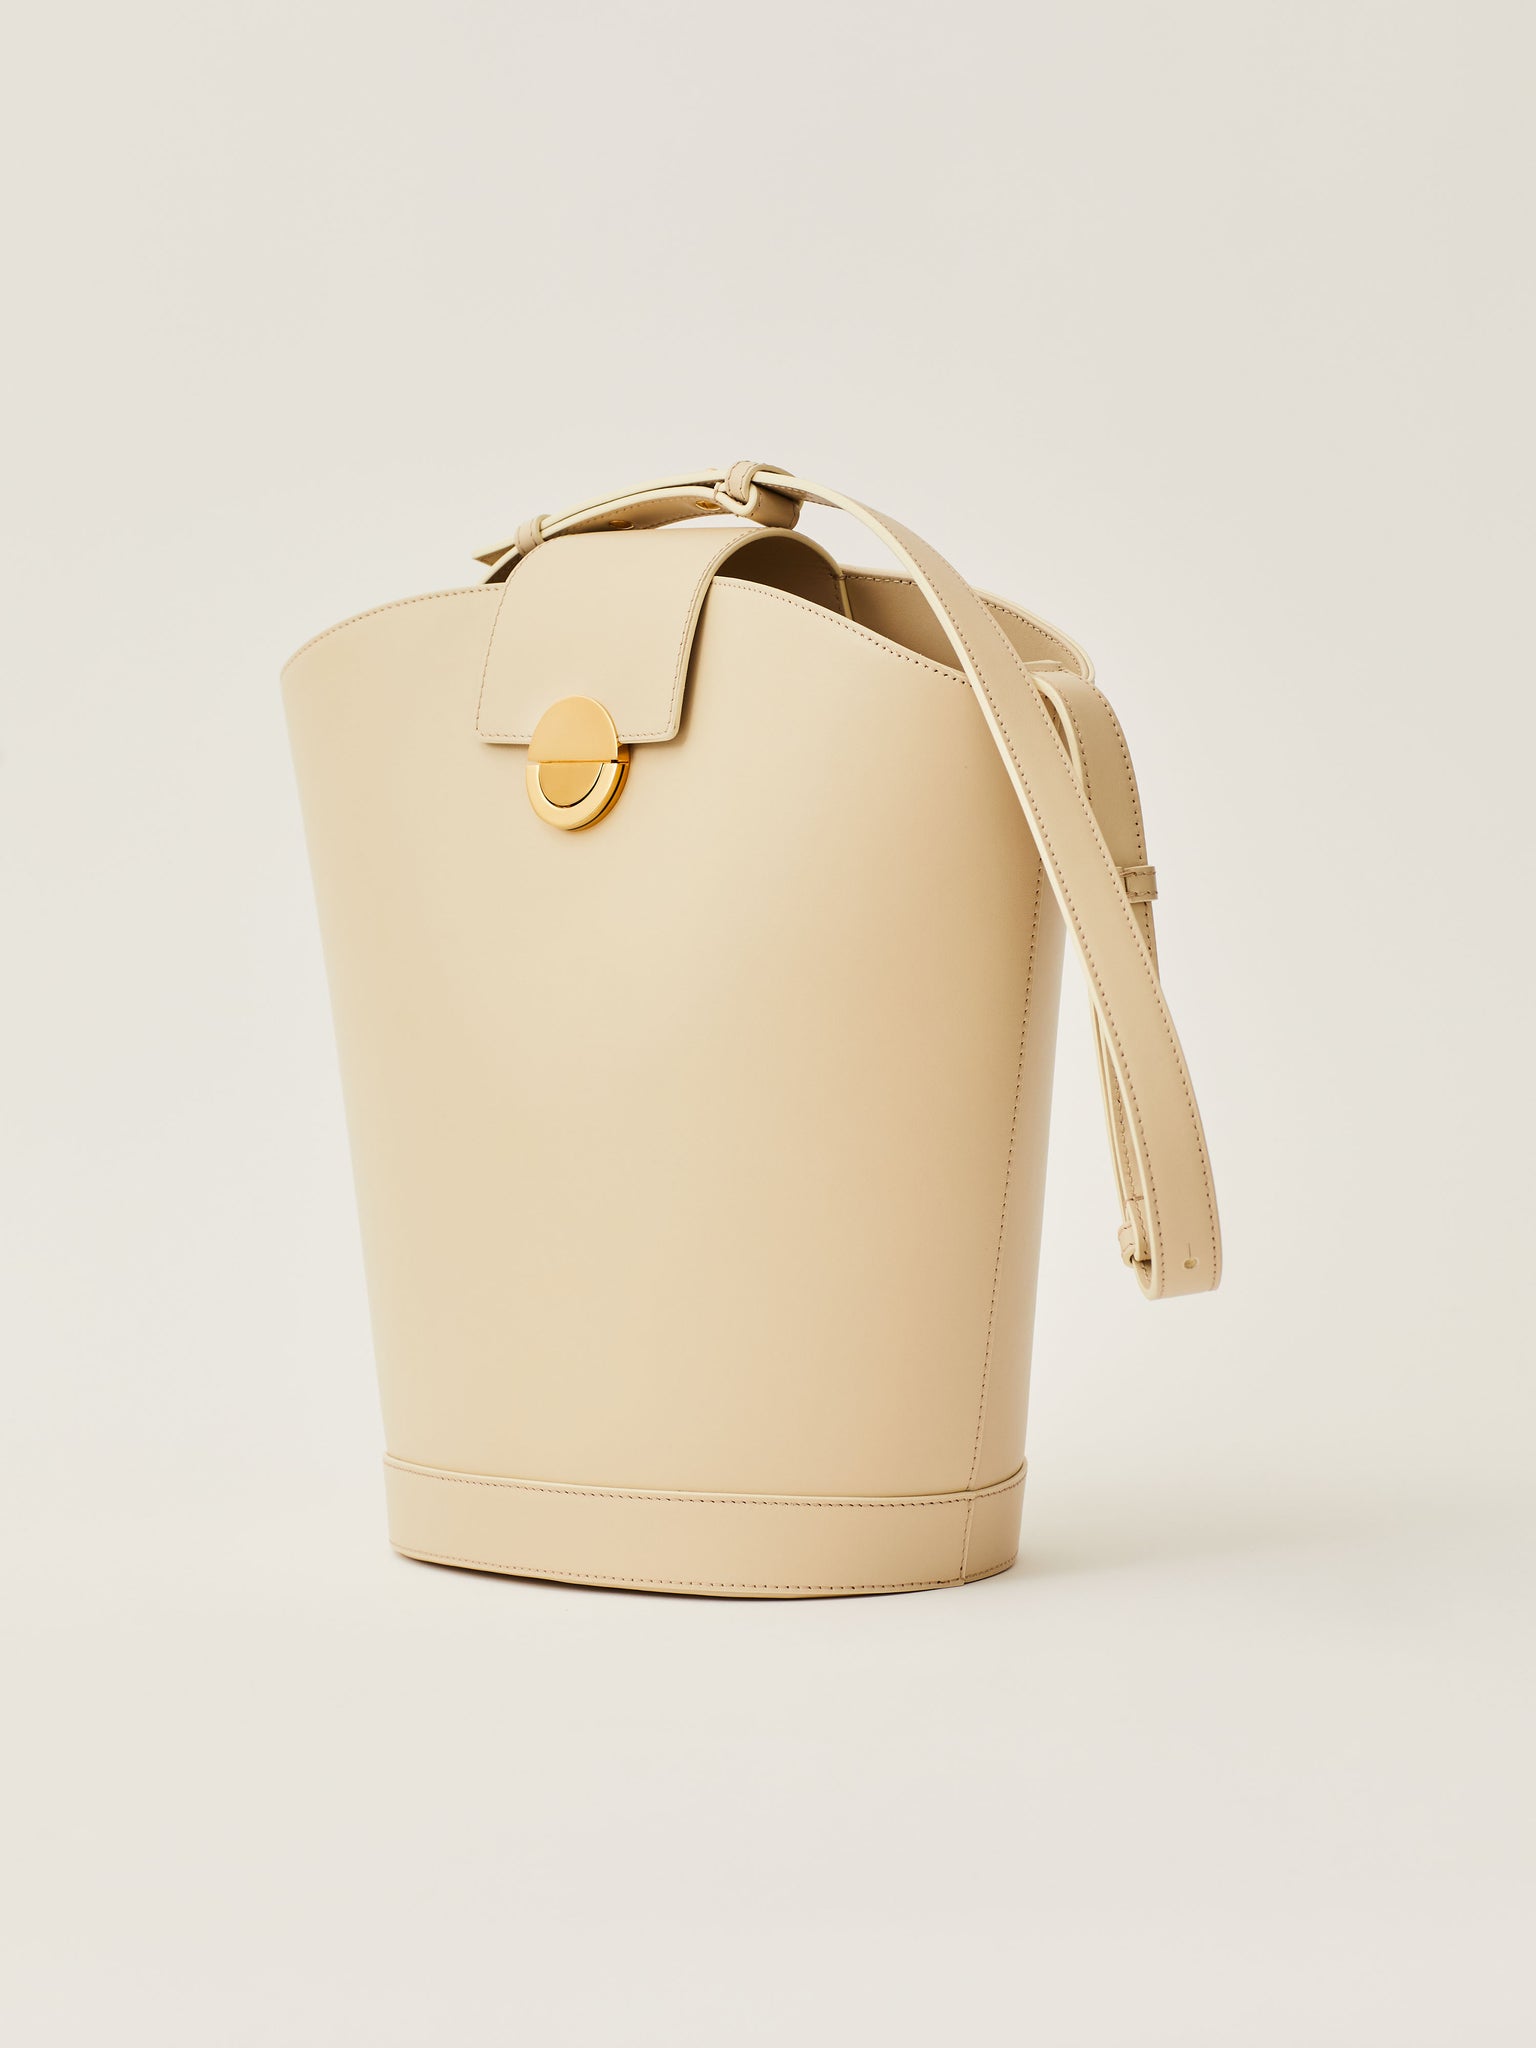 Objets Daso Ivory Leather Vivian Handbag: Profile View with Side-Draped Shoulder Strap